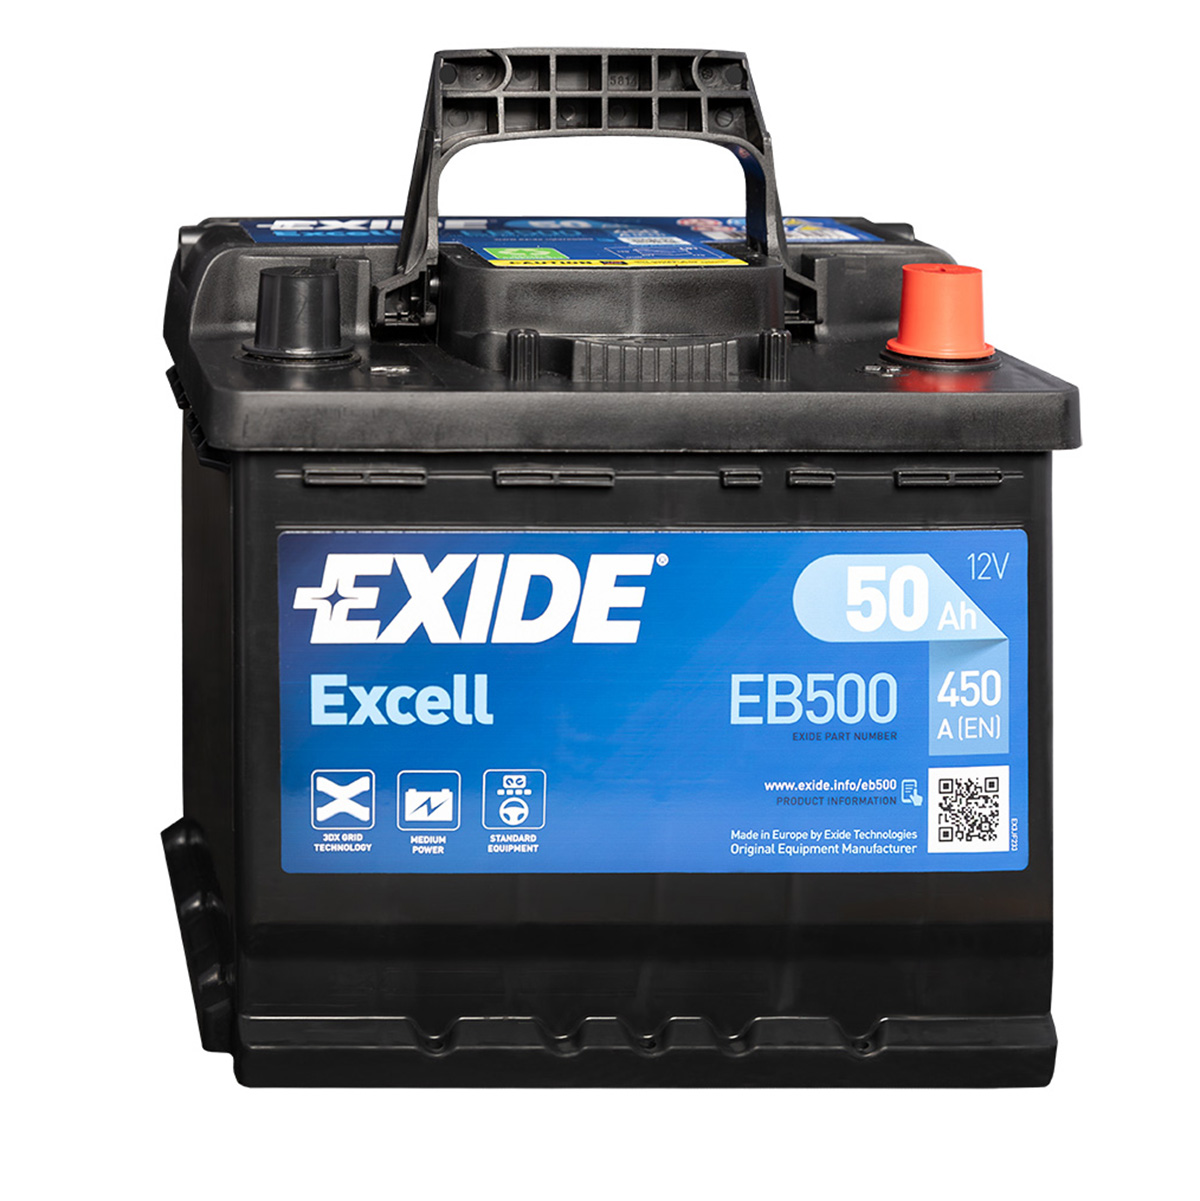 Exide Excell EB500 12V 50Ah Autobatterie, Autobatterien, Starterbatterien, Fahrzeugbatterien